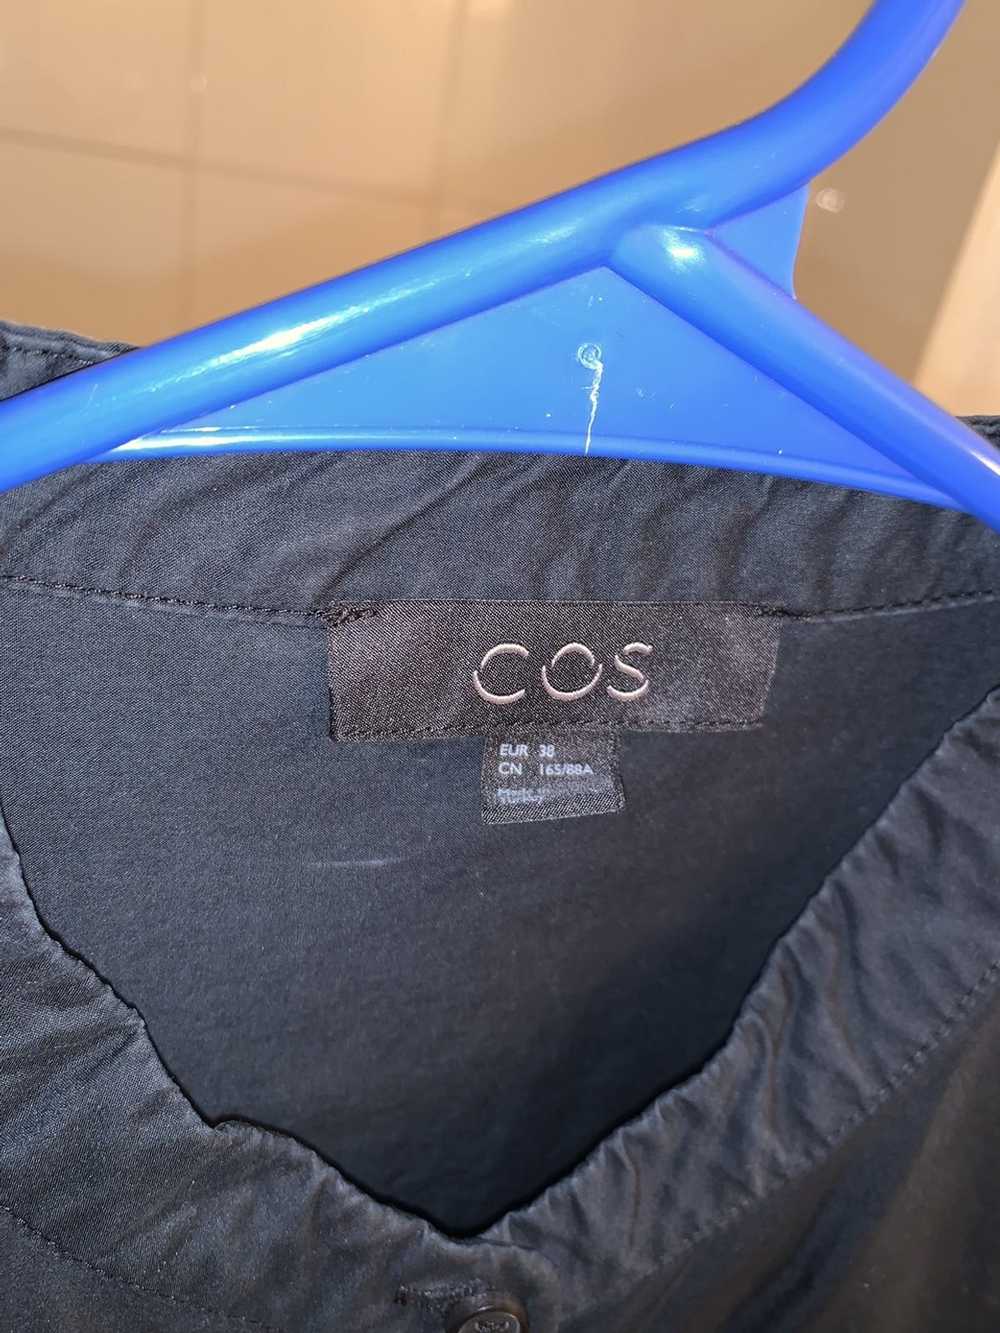 Cos Cos Multilayer black short sleeve shirt dress - image 2